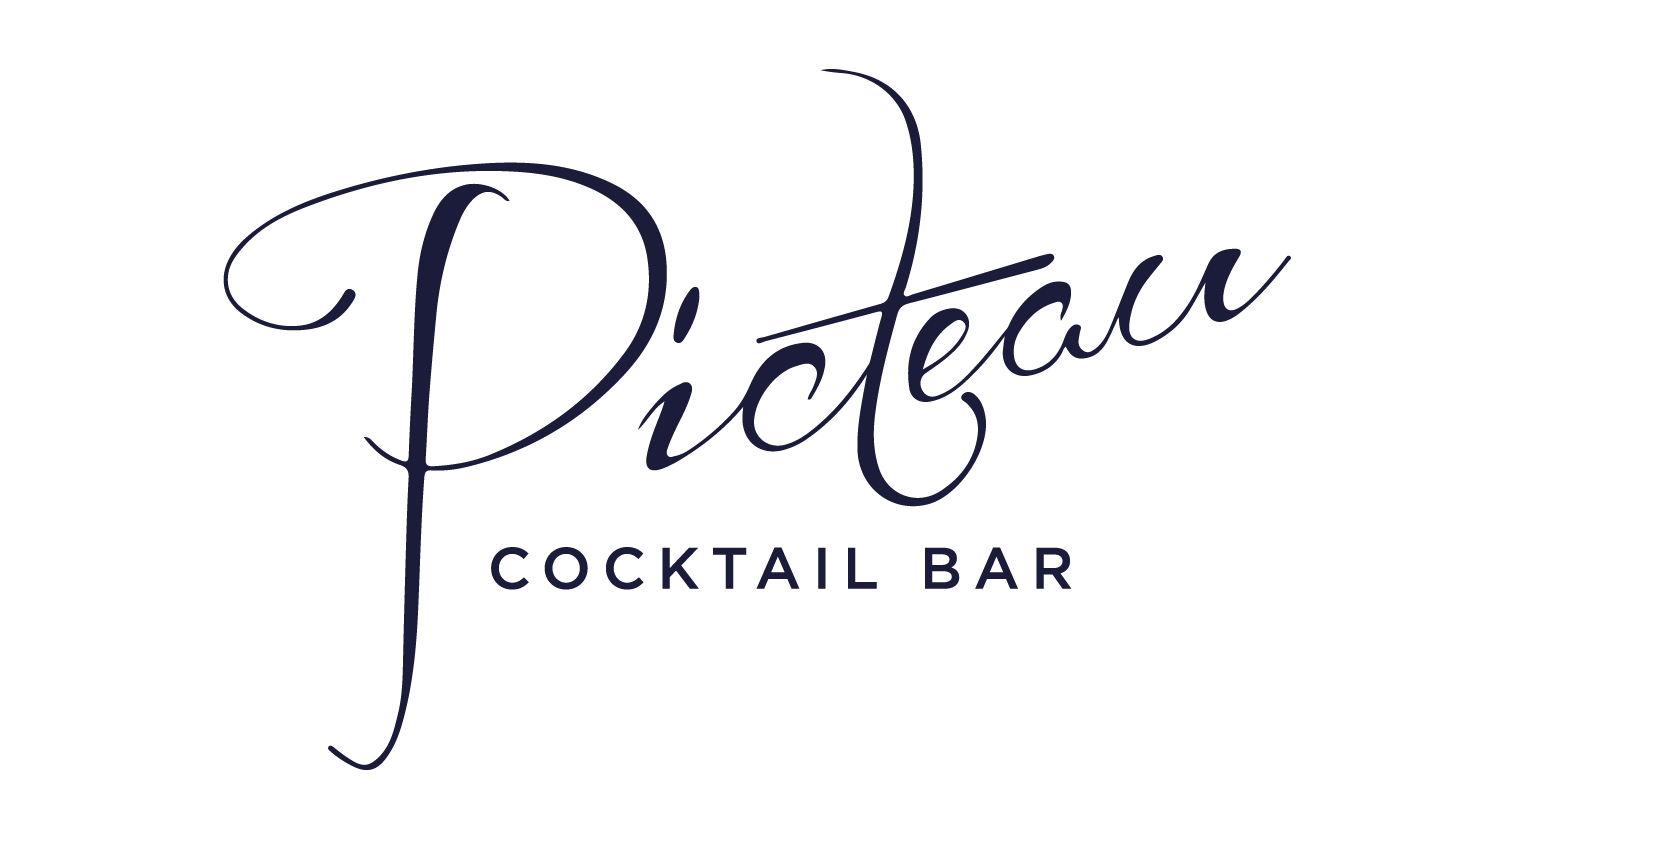 Picteau_logo.png